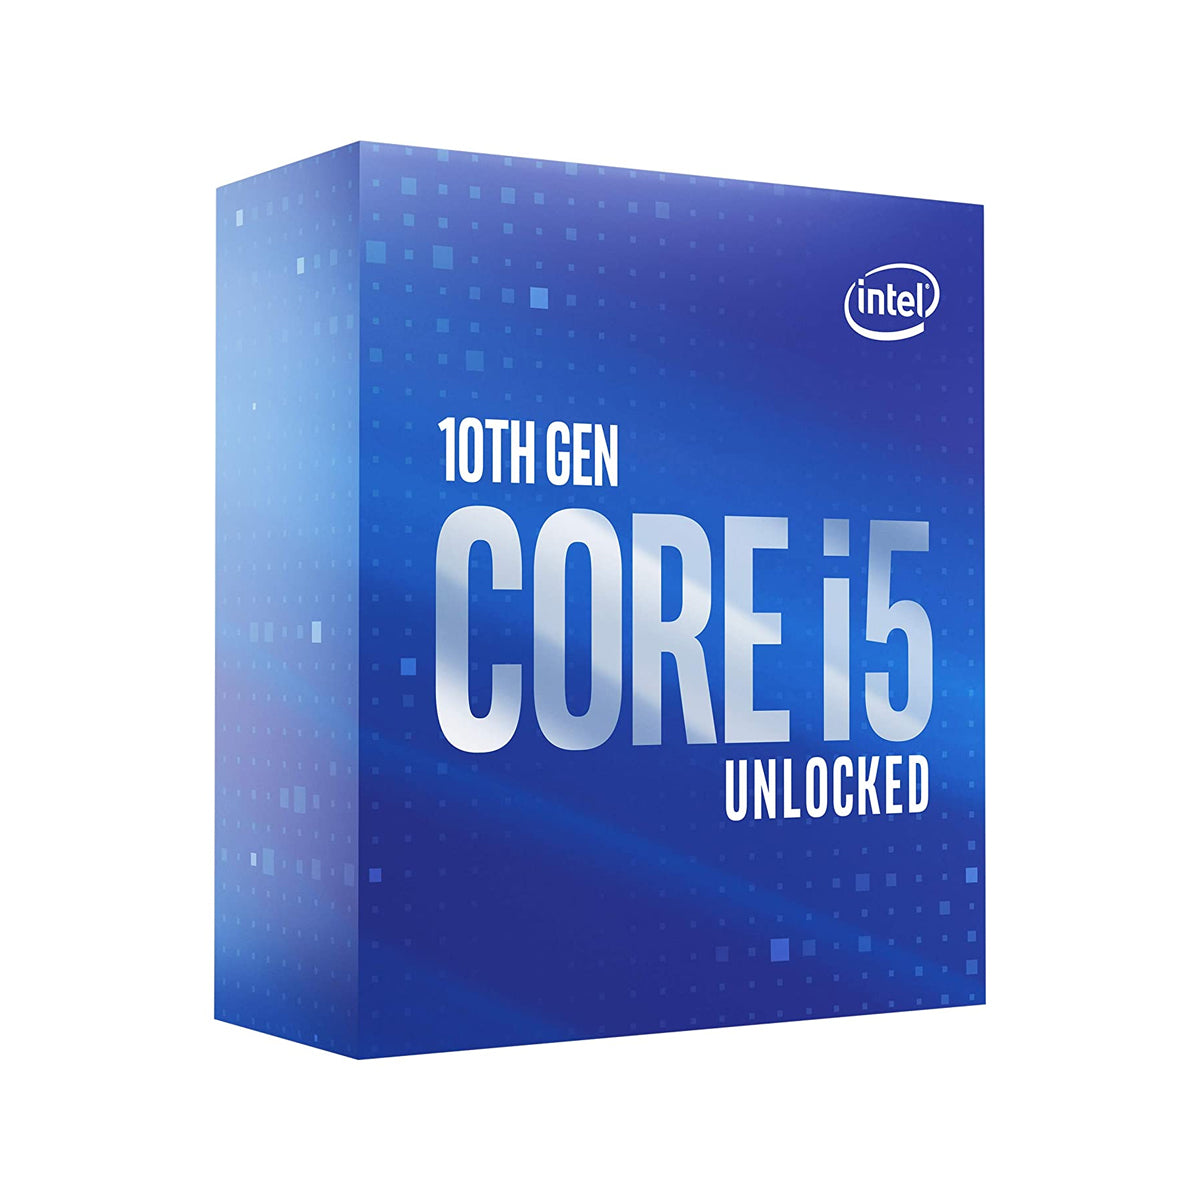 Intel Core 10th Gen i5-10600K LGA1200 Unlocked Desktop Processor 6 Cores up to 4.80GHz 12MB Cache